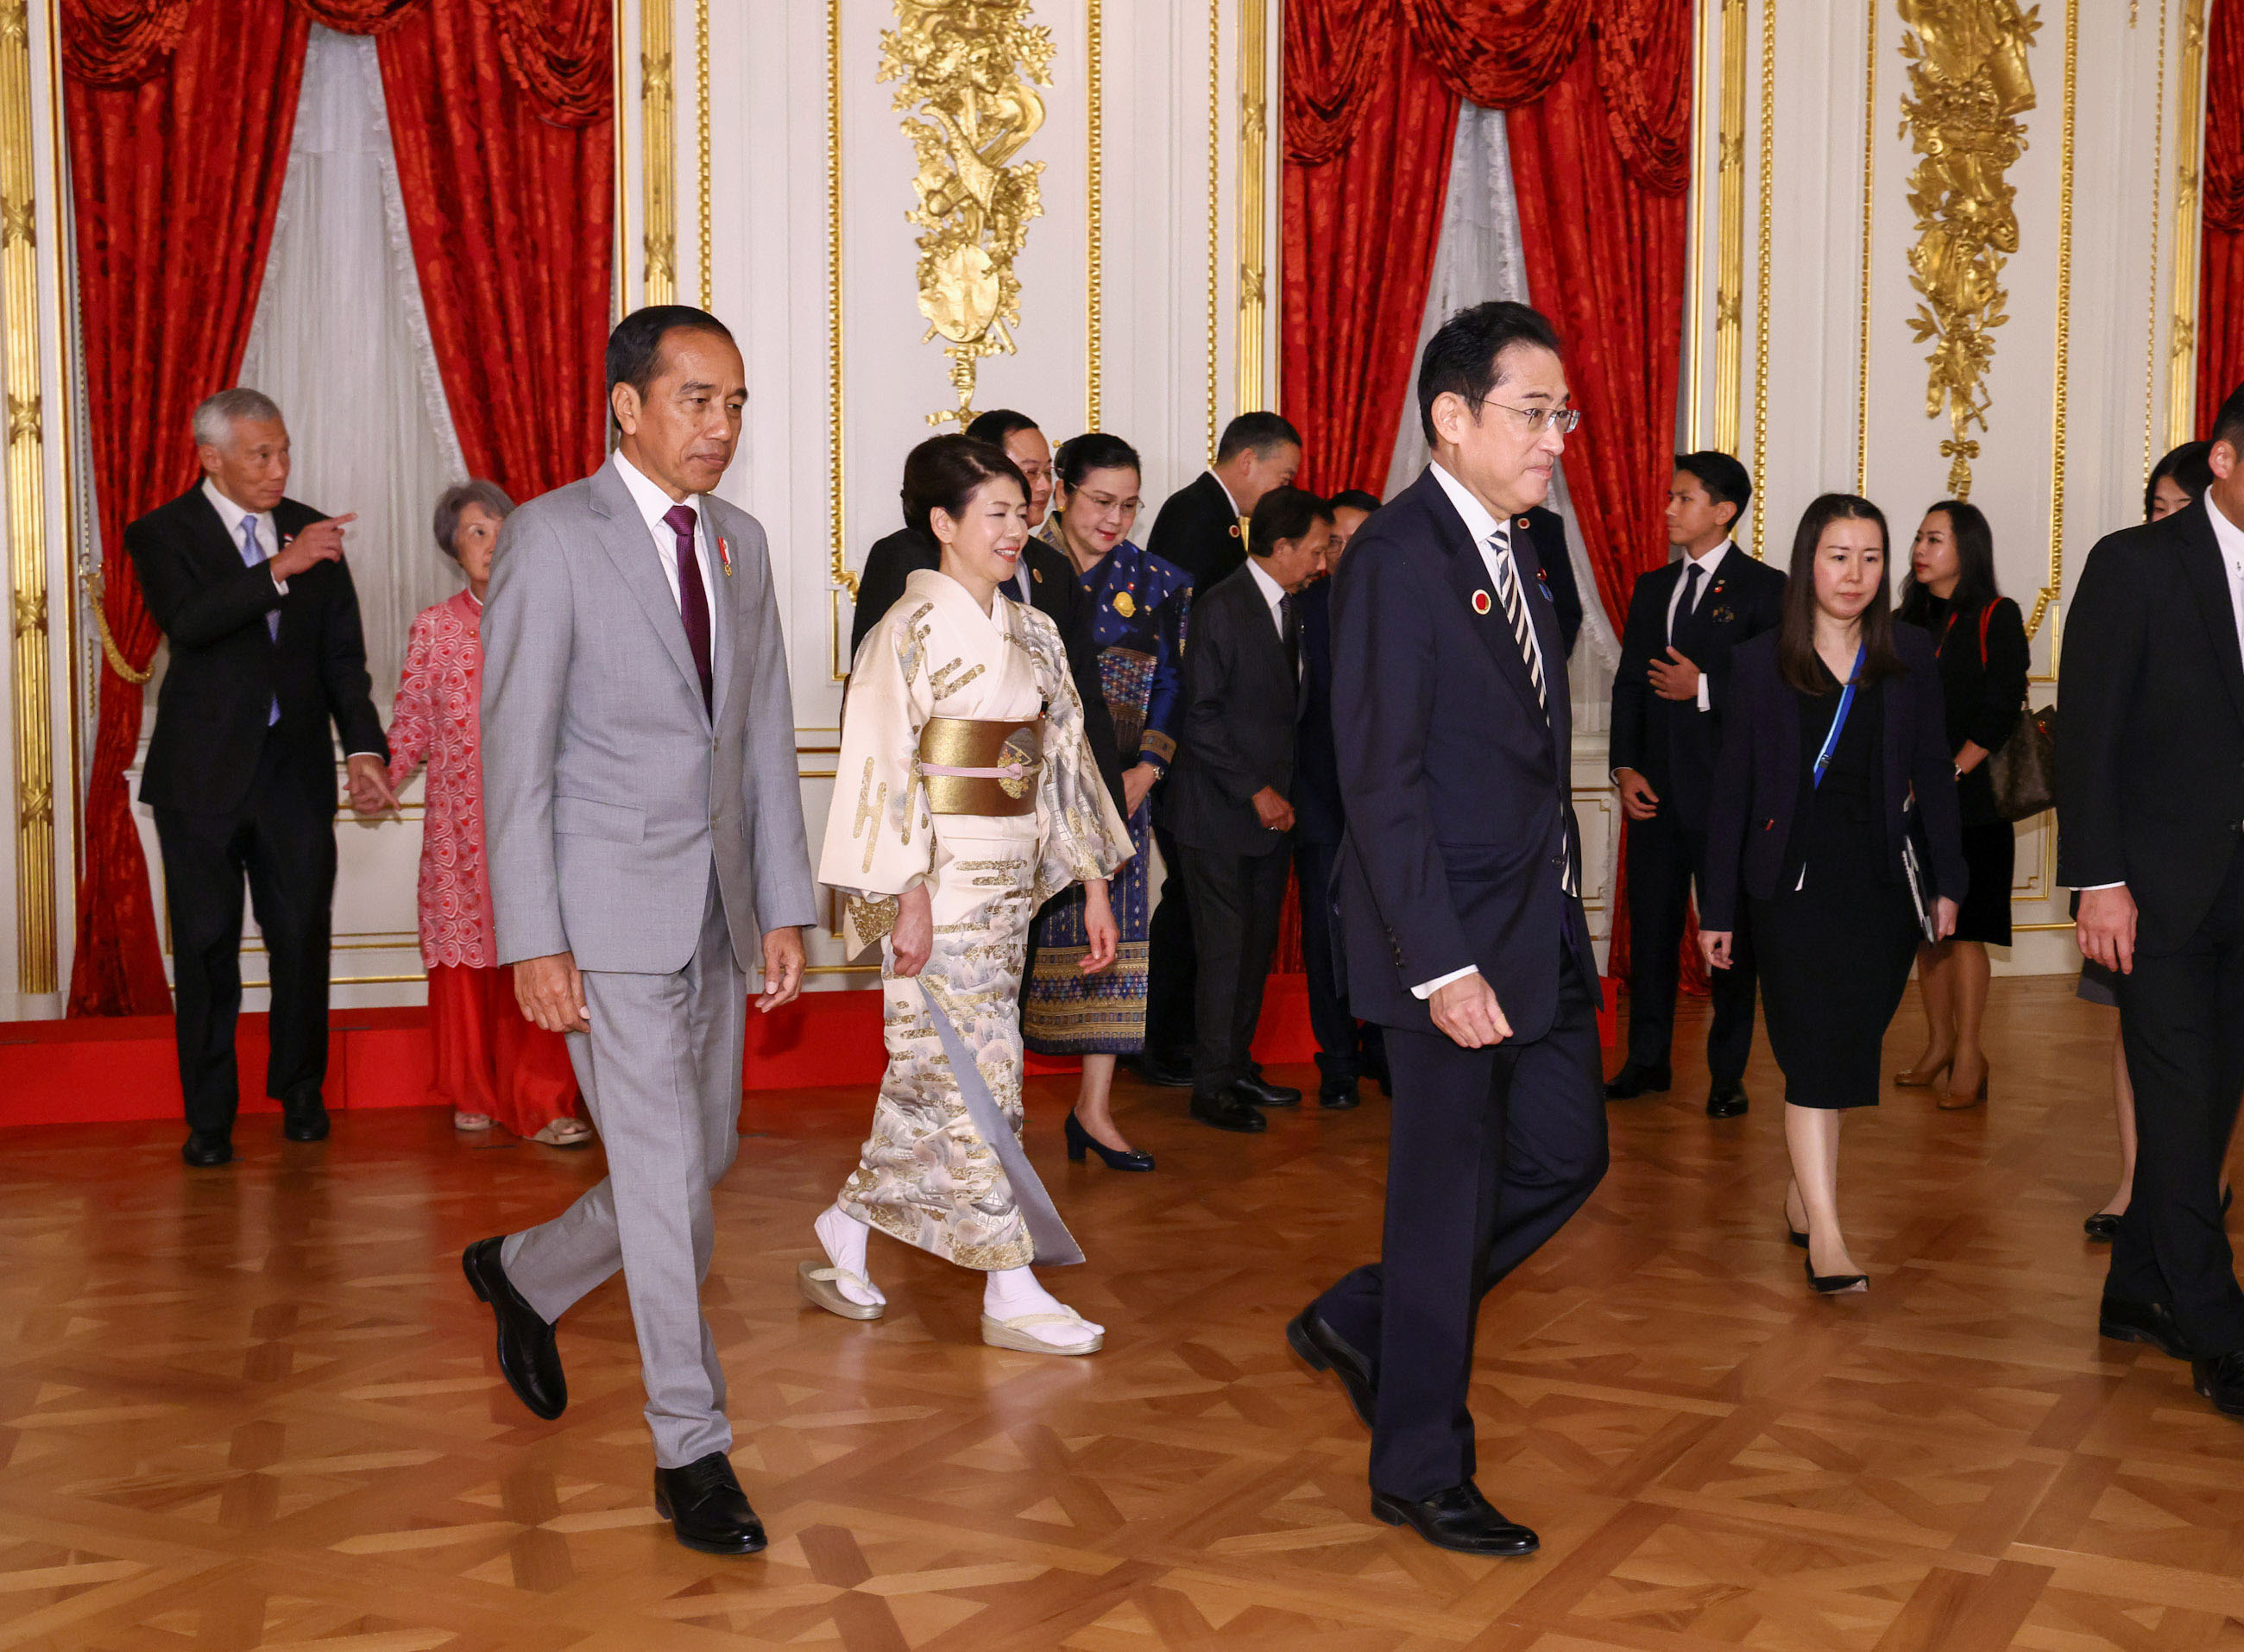 Prime Minister Kishida heading to the banquet